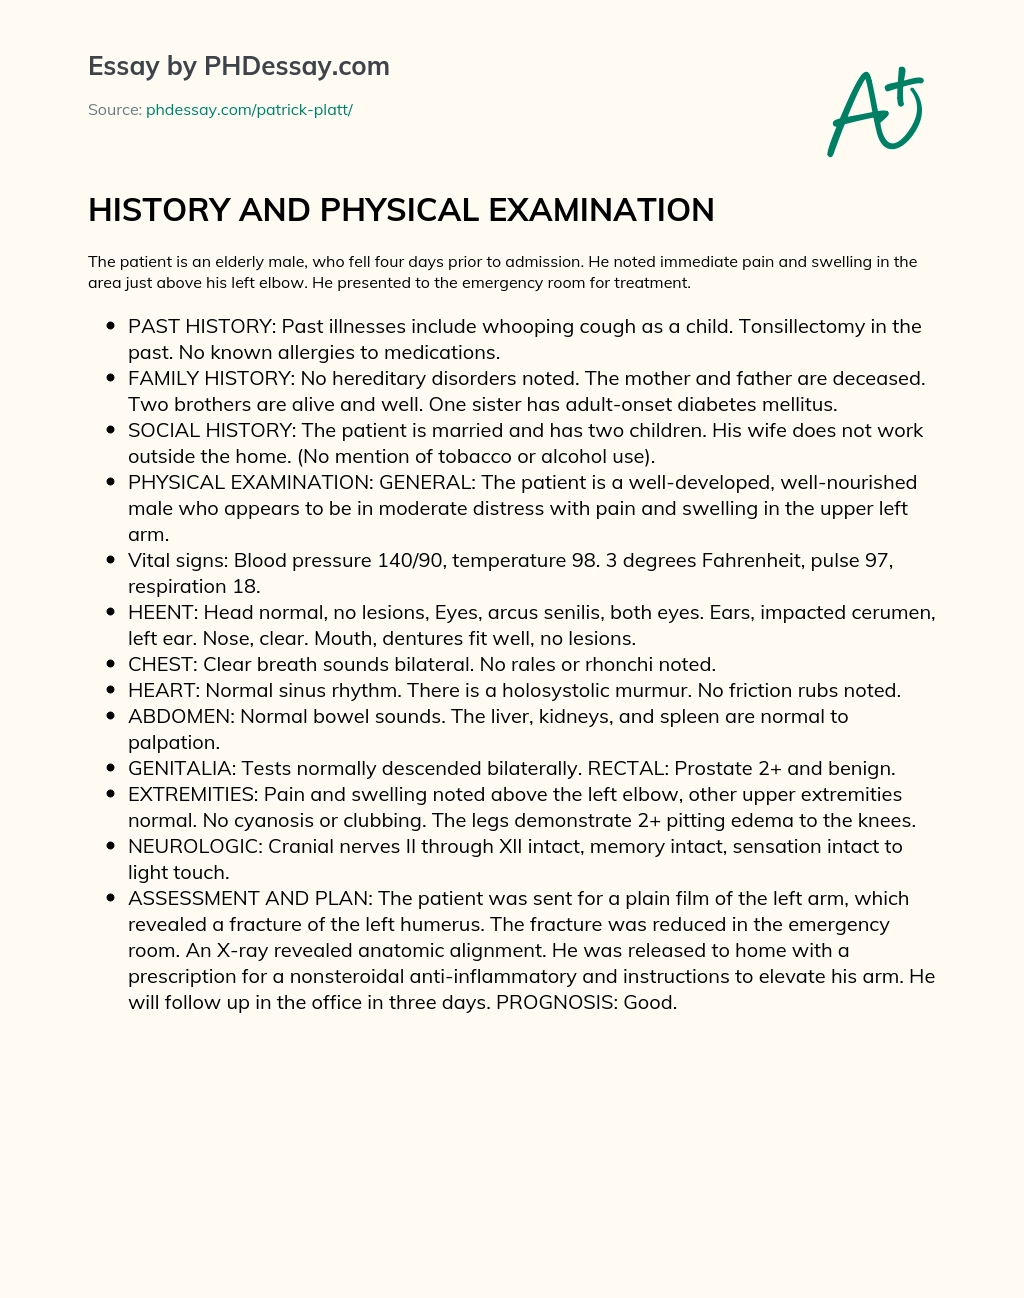 HISTORY AND PHYSICAL EXAMINATION essay